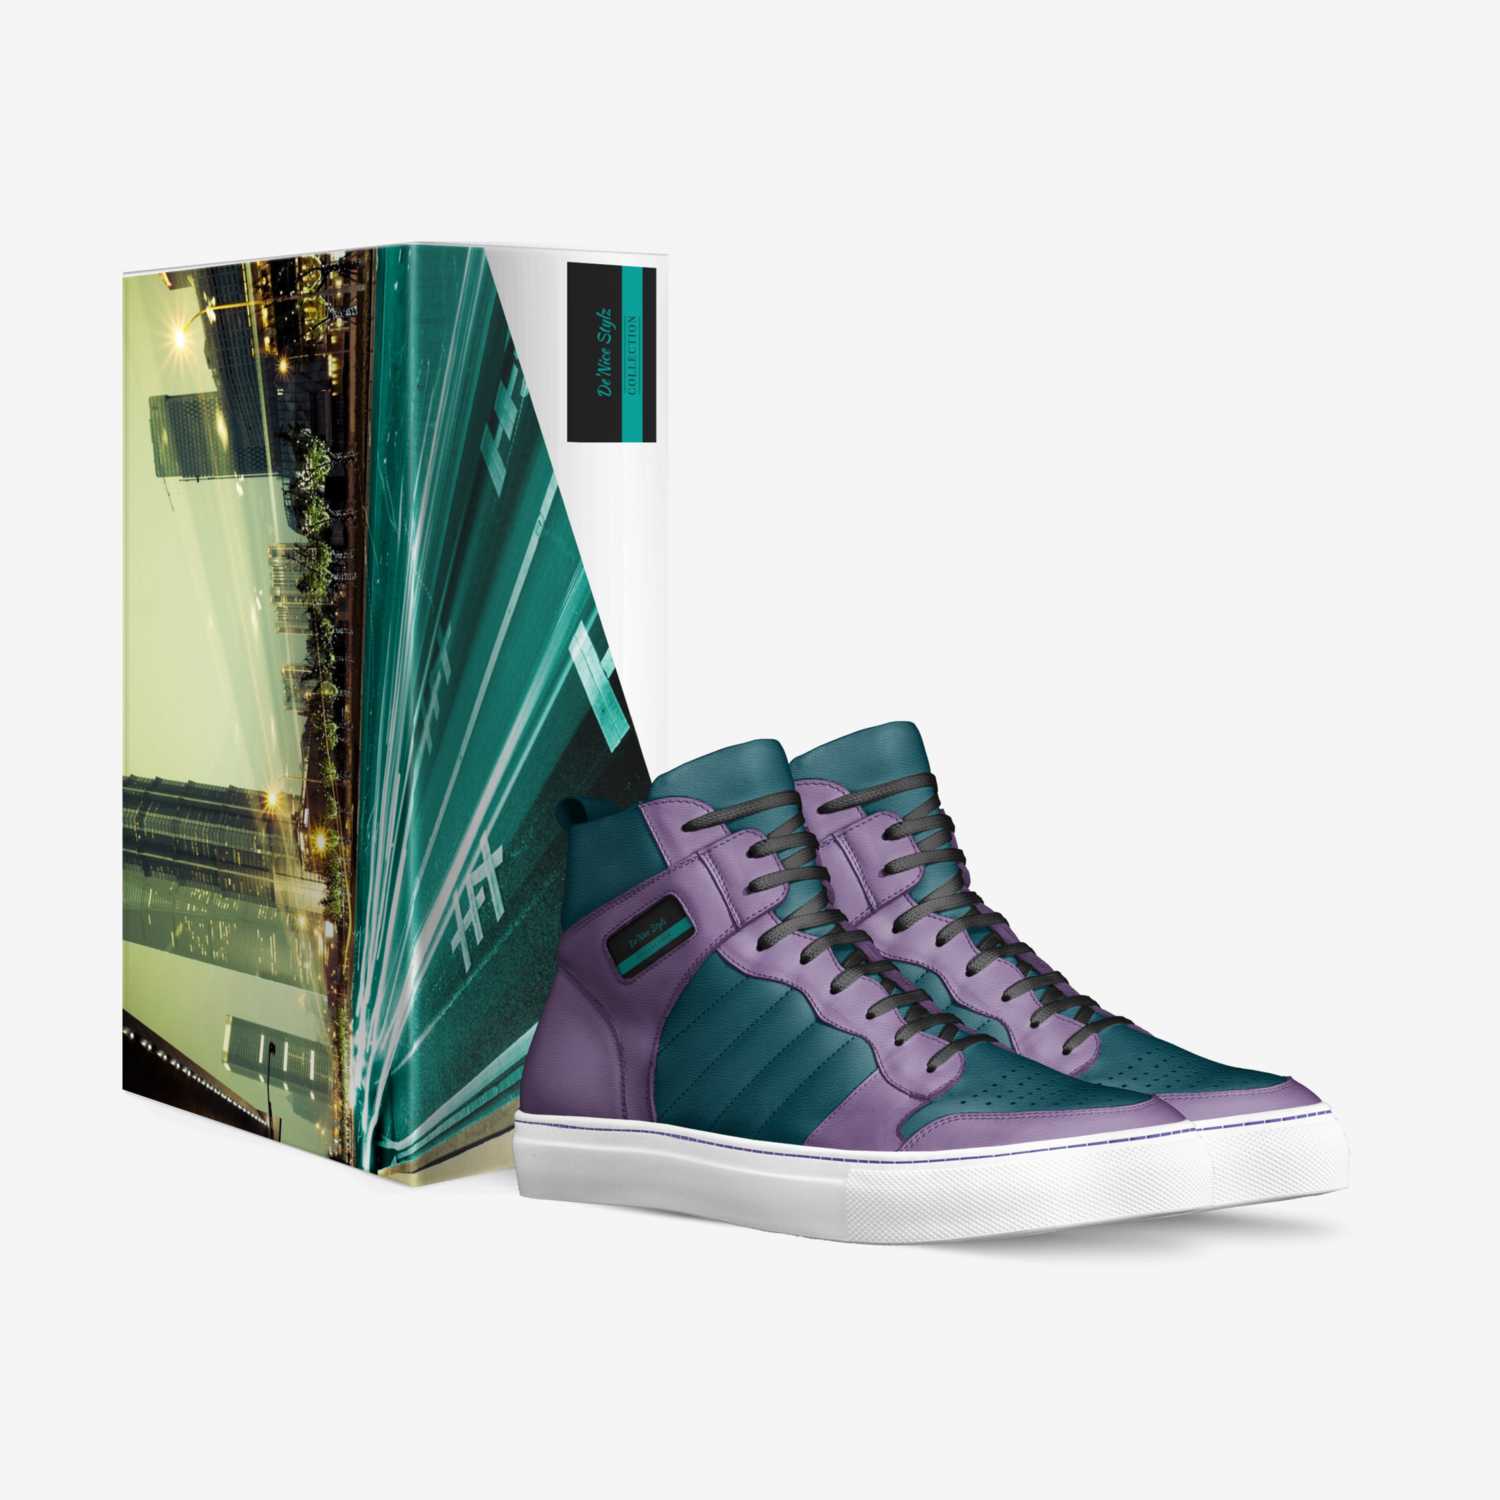 De'Nice Stylz custom made in Italy shoes by Natasha Robinson | Box view